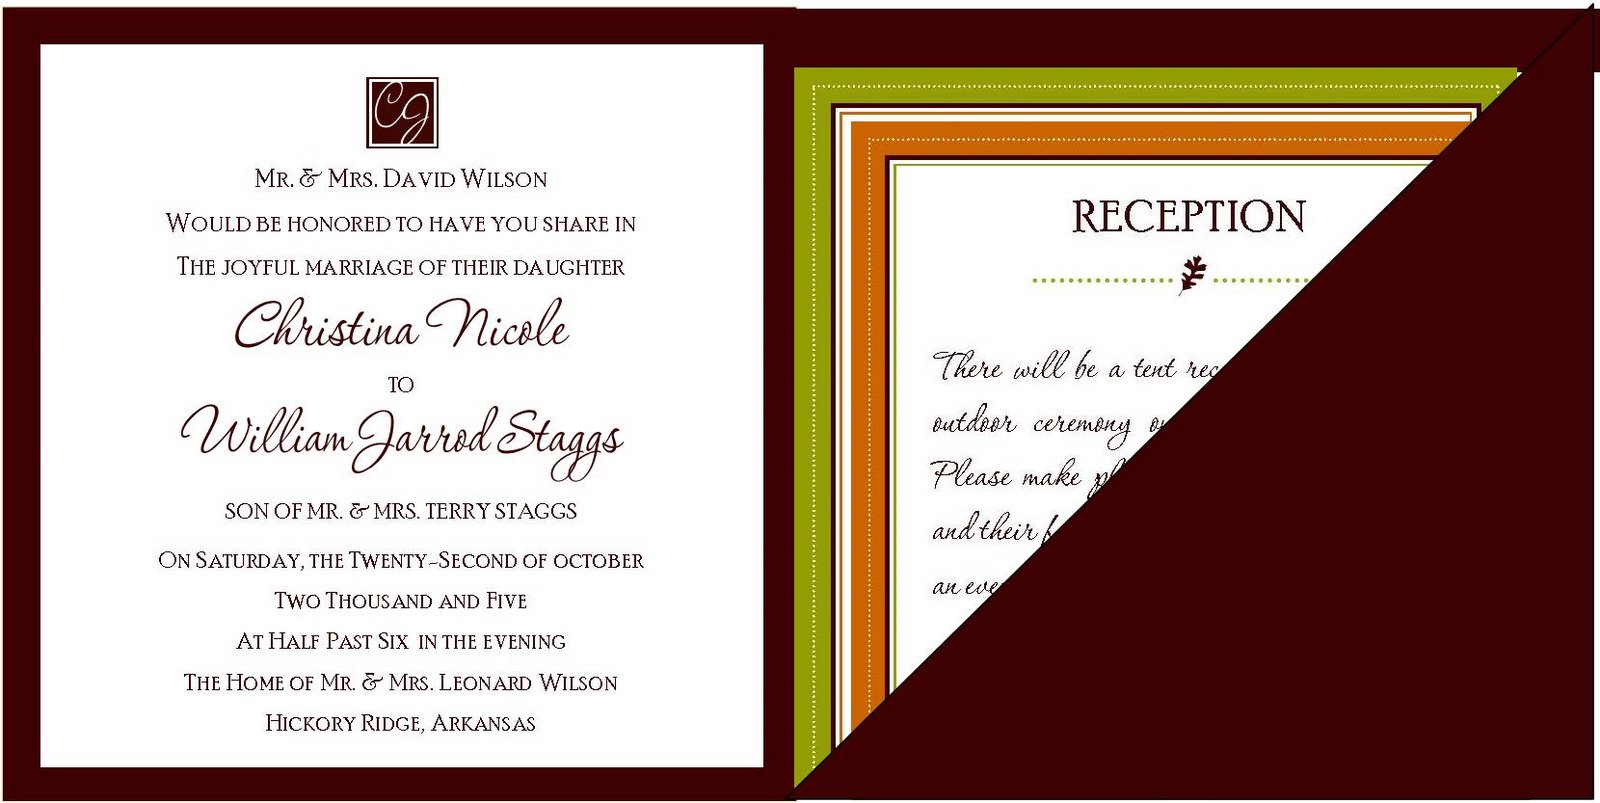 [Inside+View+of+Wedding+invitation.jpg]